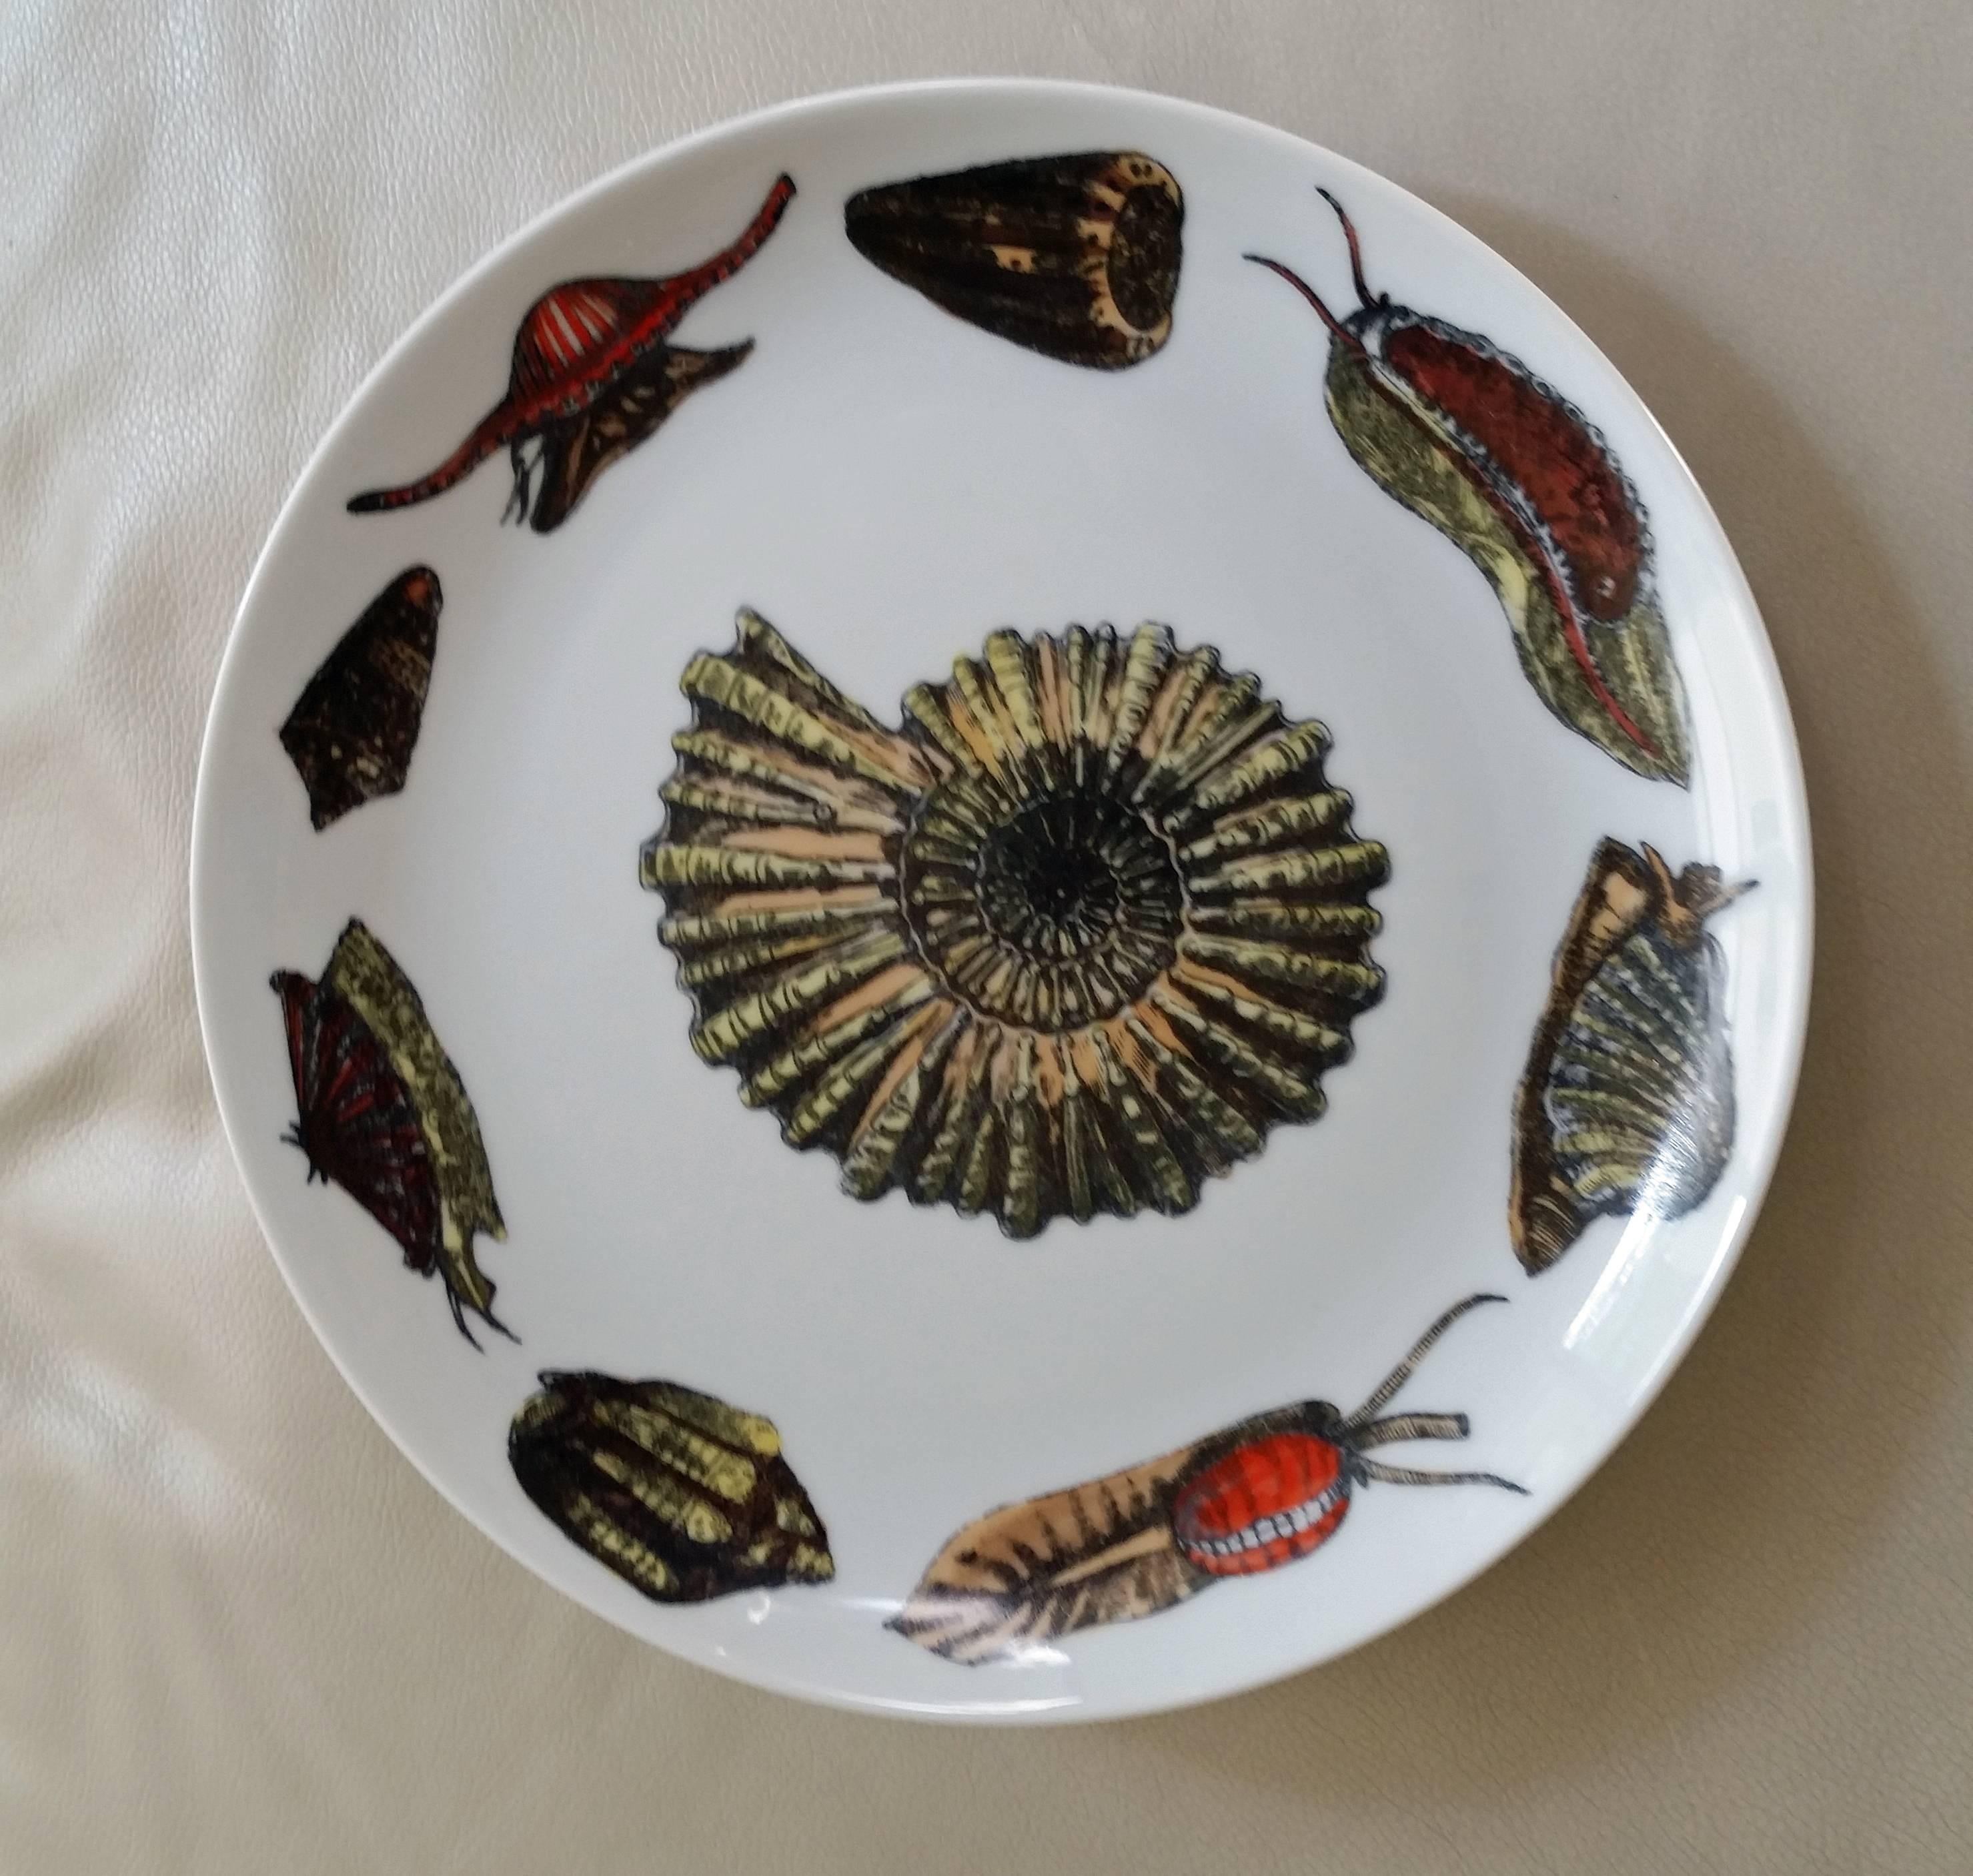 Piero Fornasetti Set of nine Plates in Early Conchiglie seashell pattern. 1